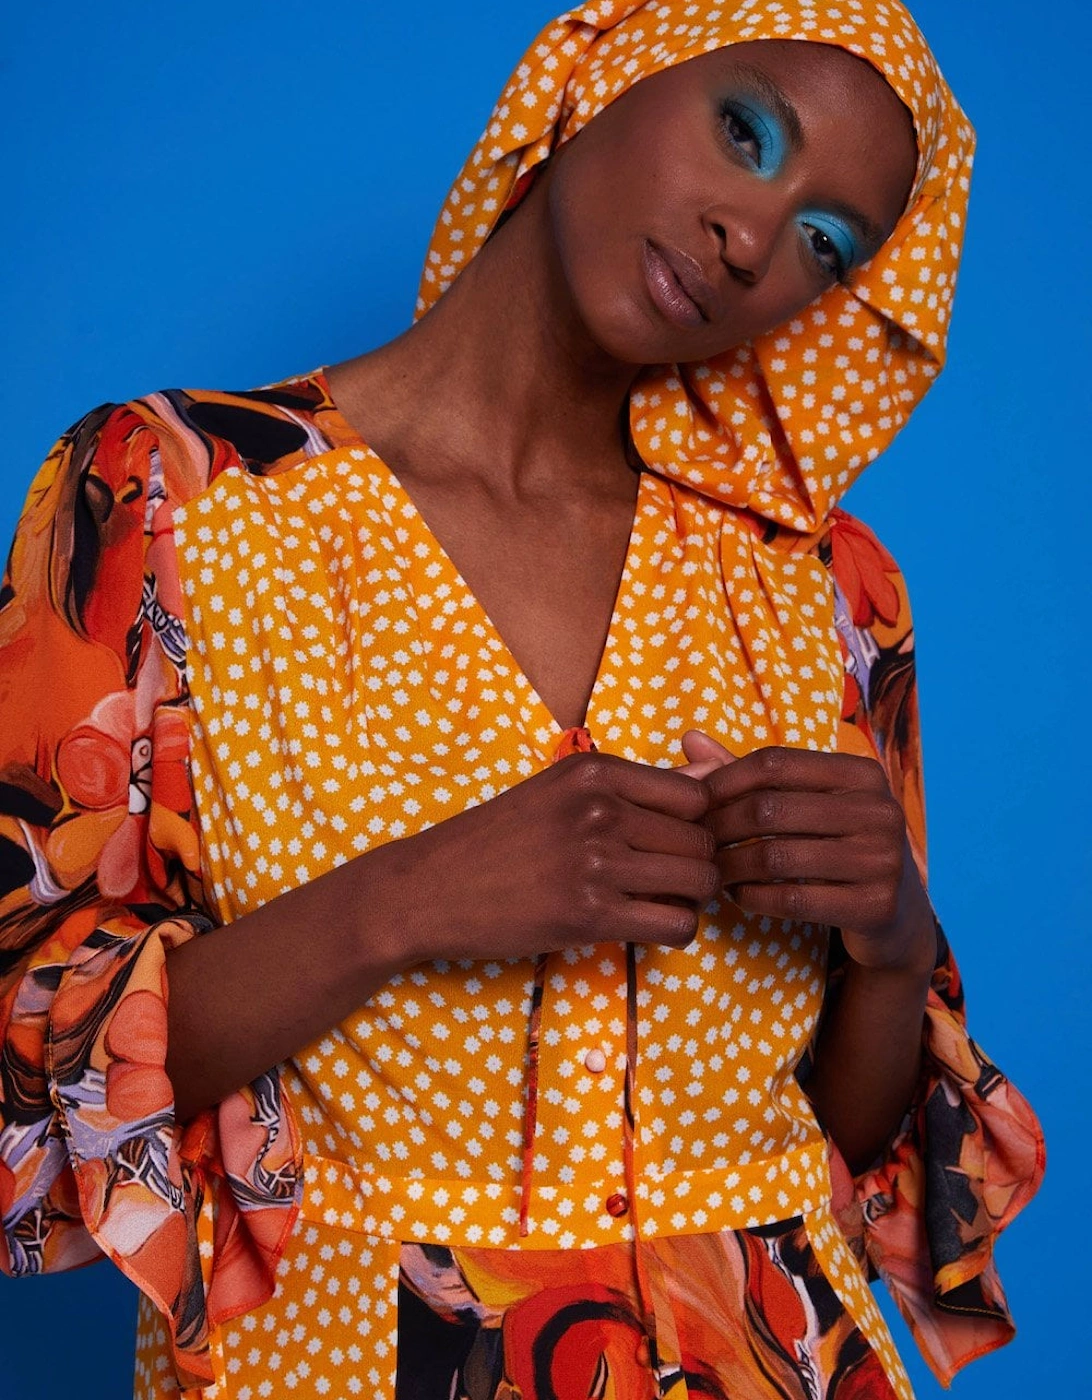 Autumn Long Sleeve Maxi Dress with Fish Design